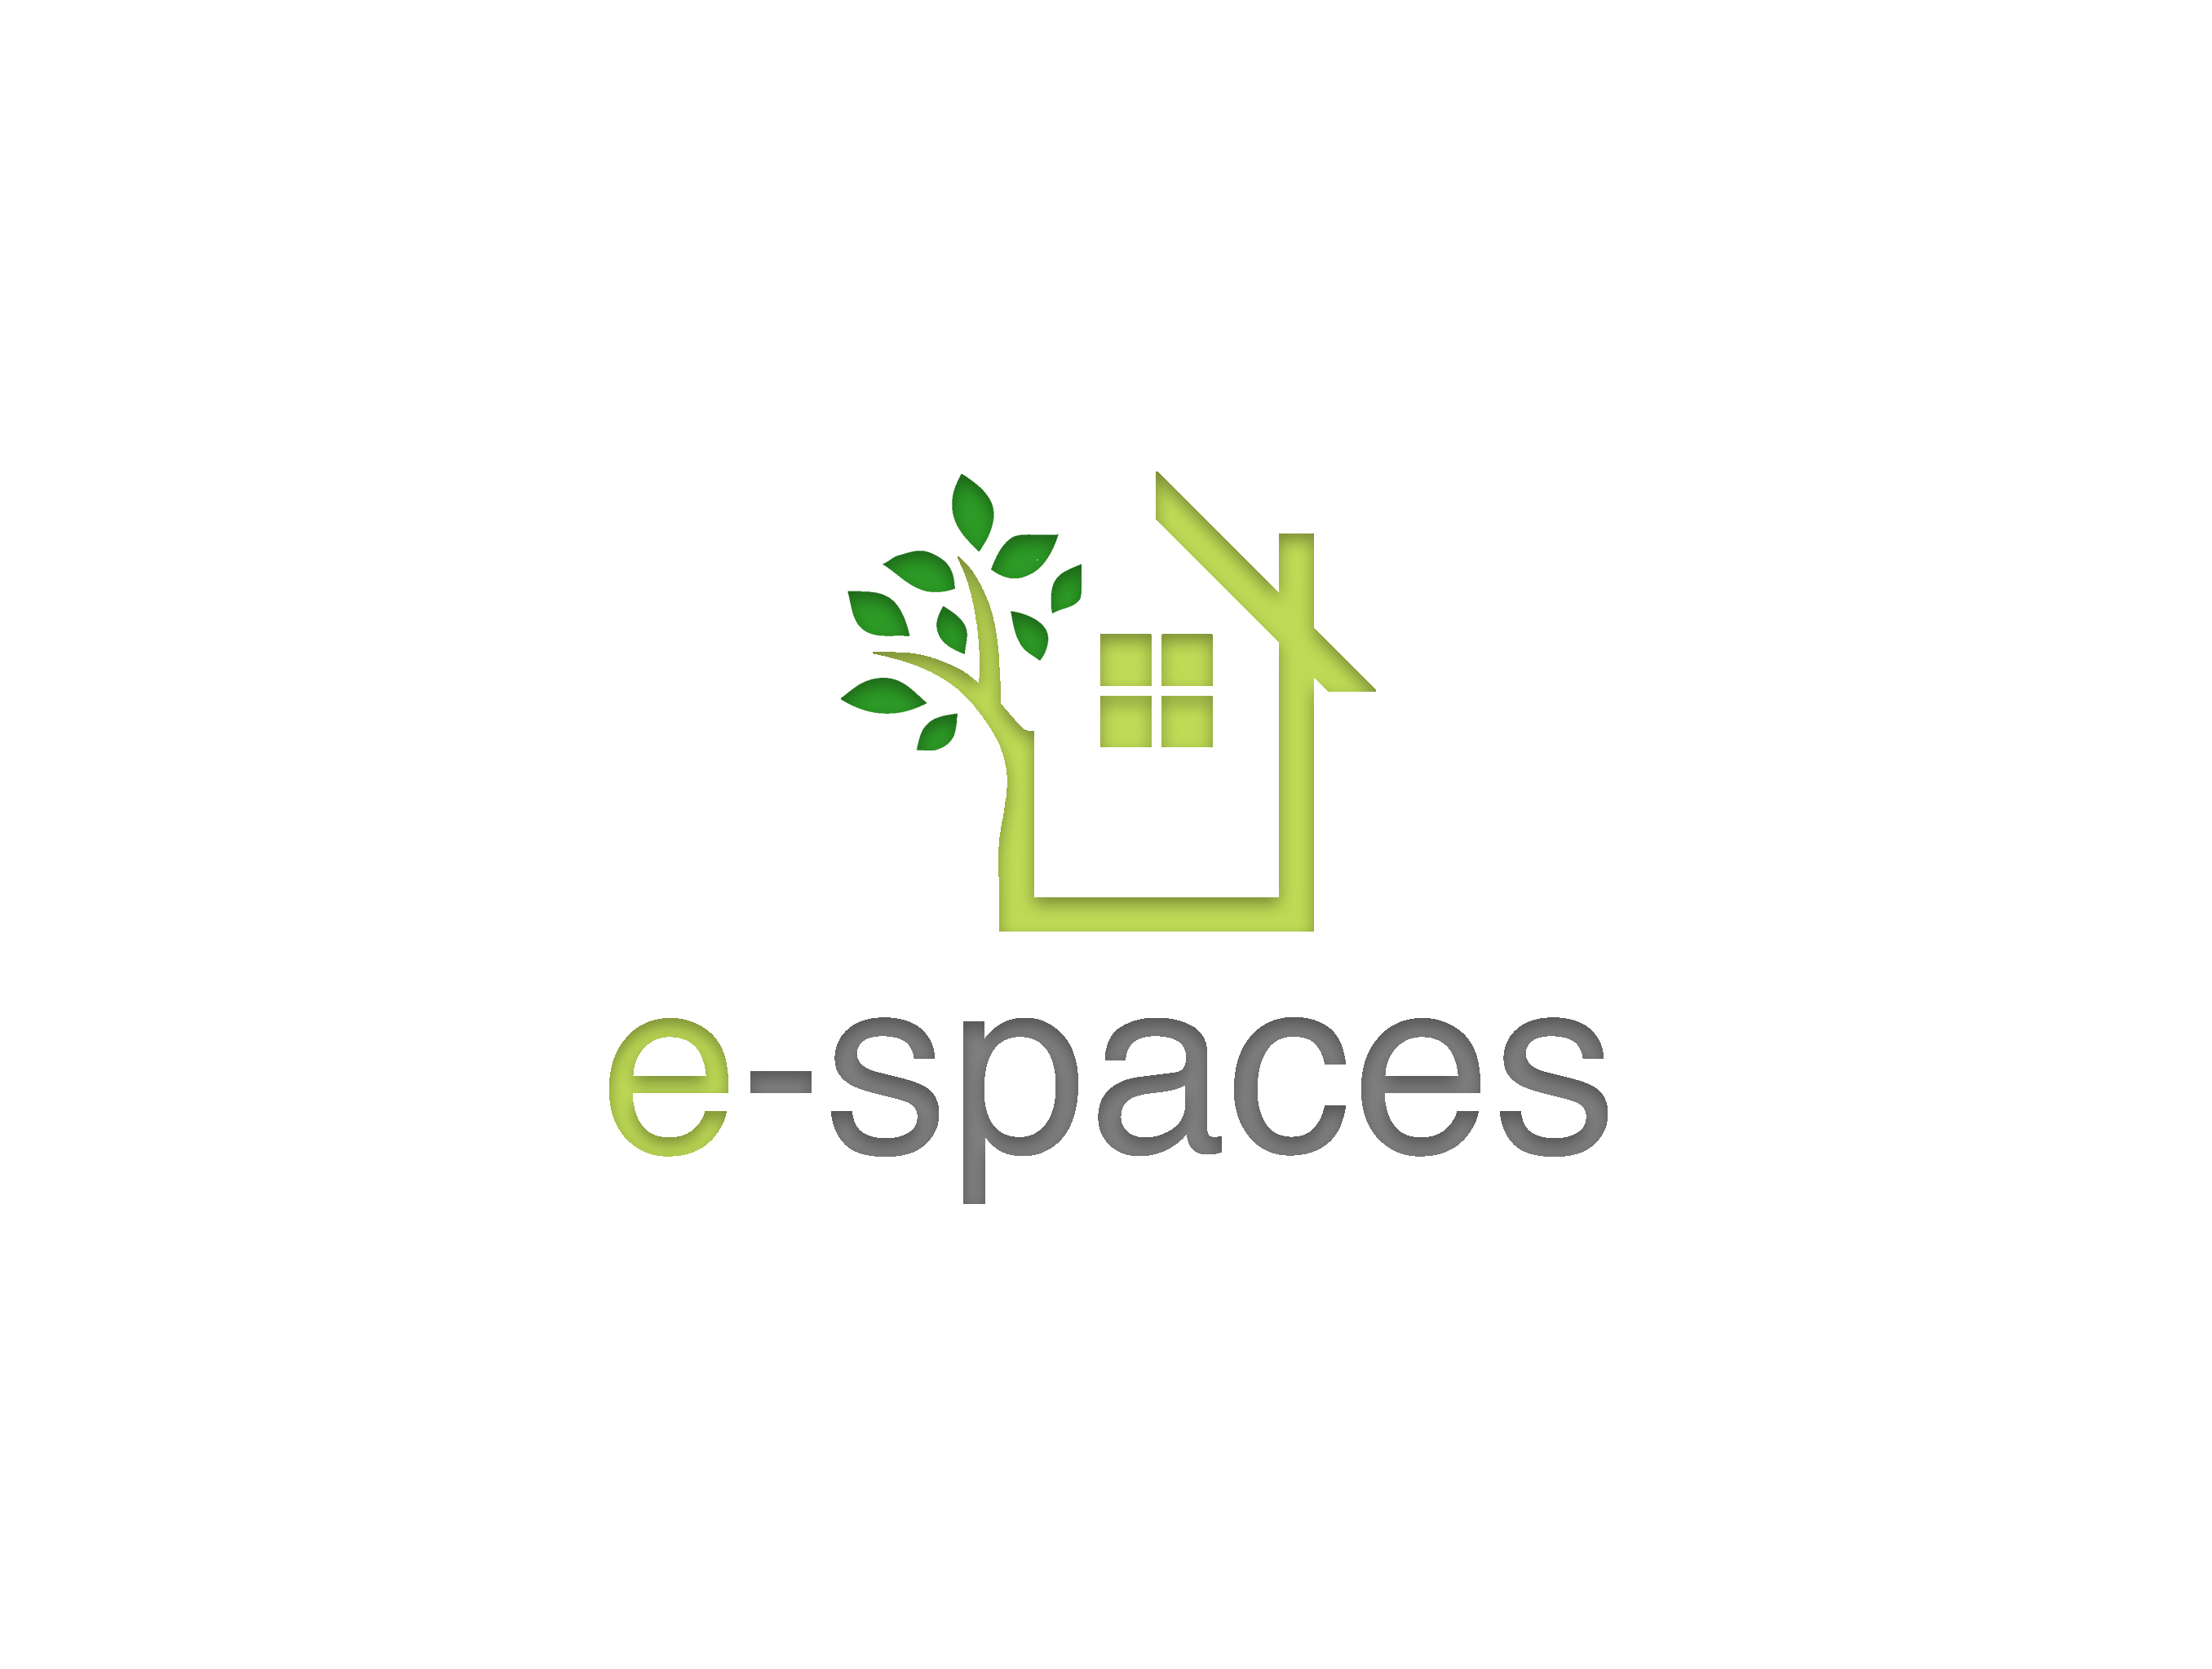 E-spaces Design and Create Ltd